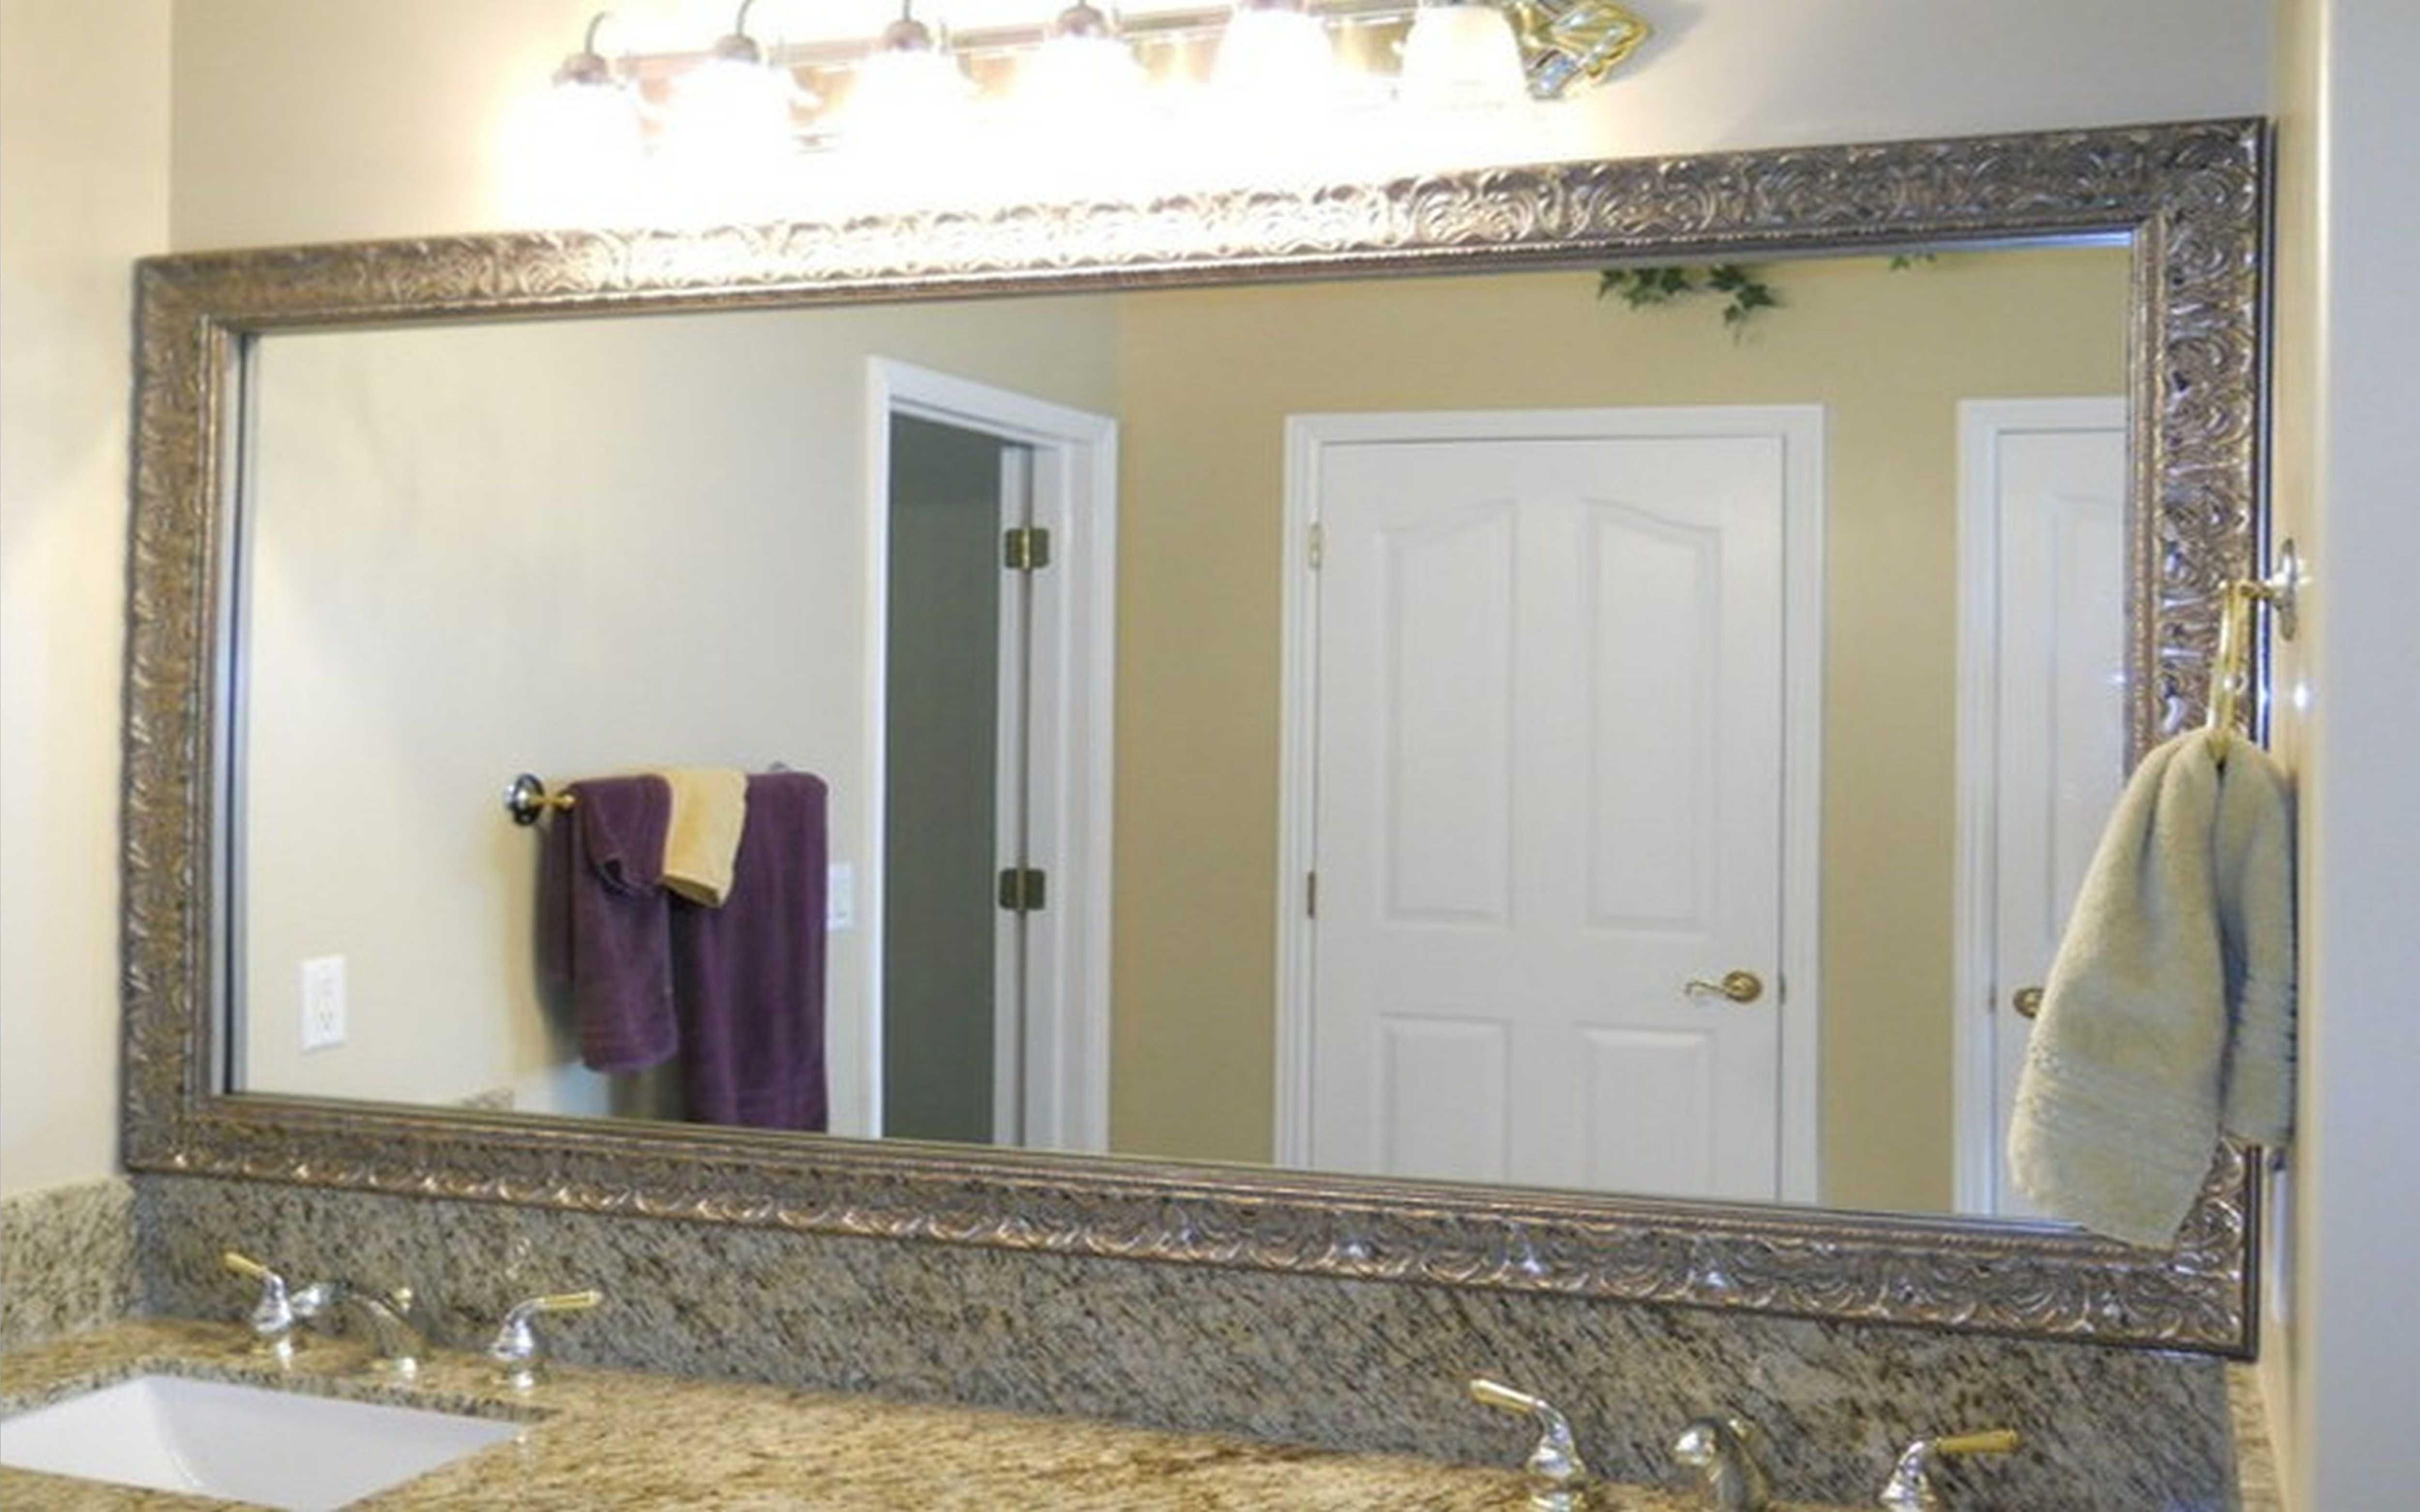 Bathroom: Elegant Bathroom Decor With Large Framed Bathroom For Large Long Mirror (View 14 of 20)